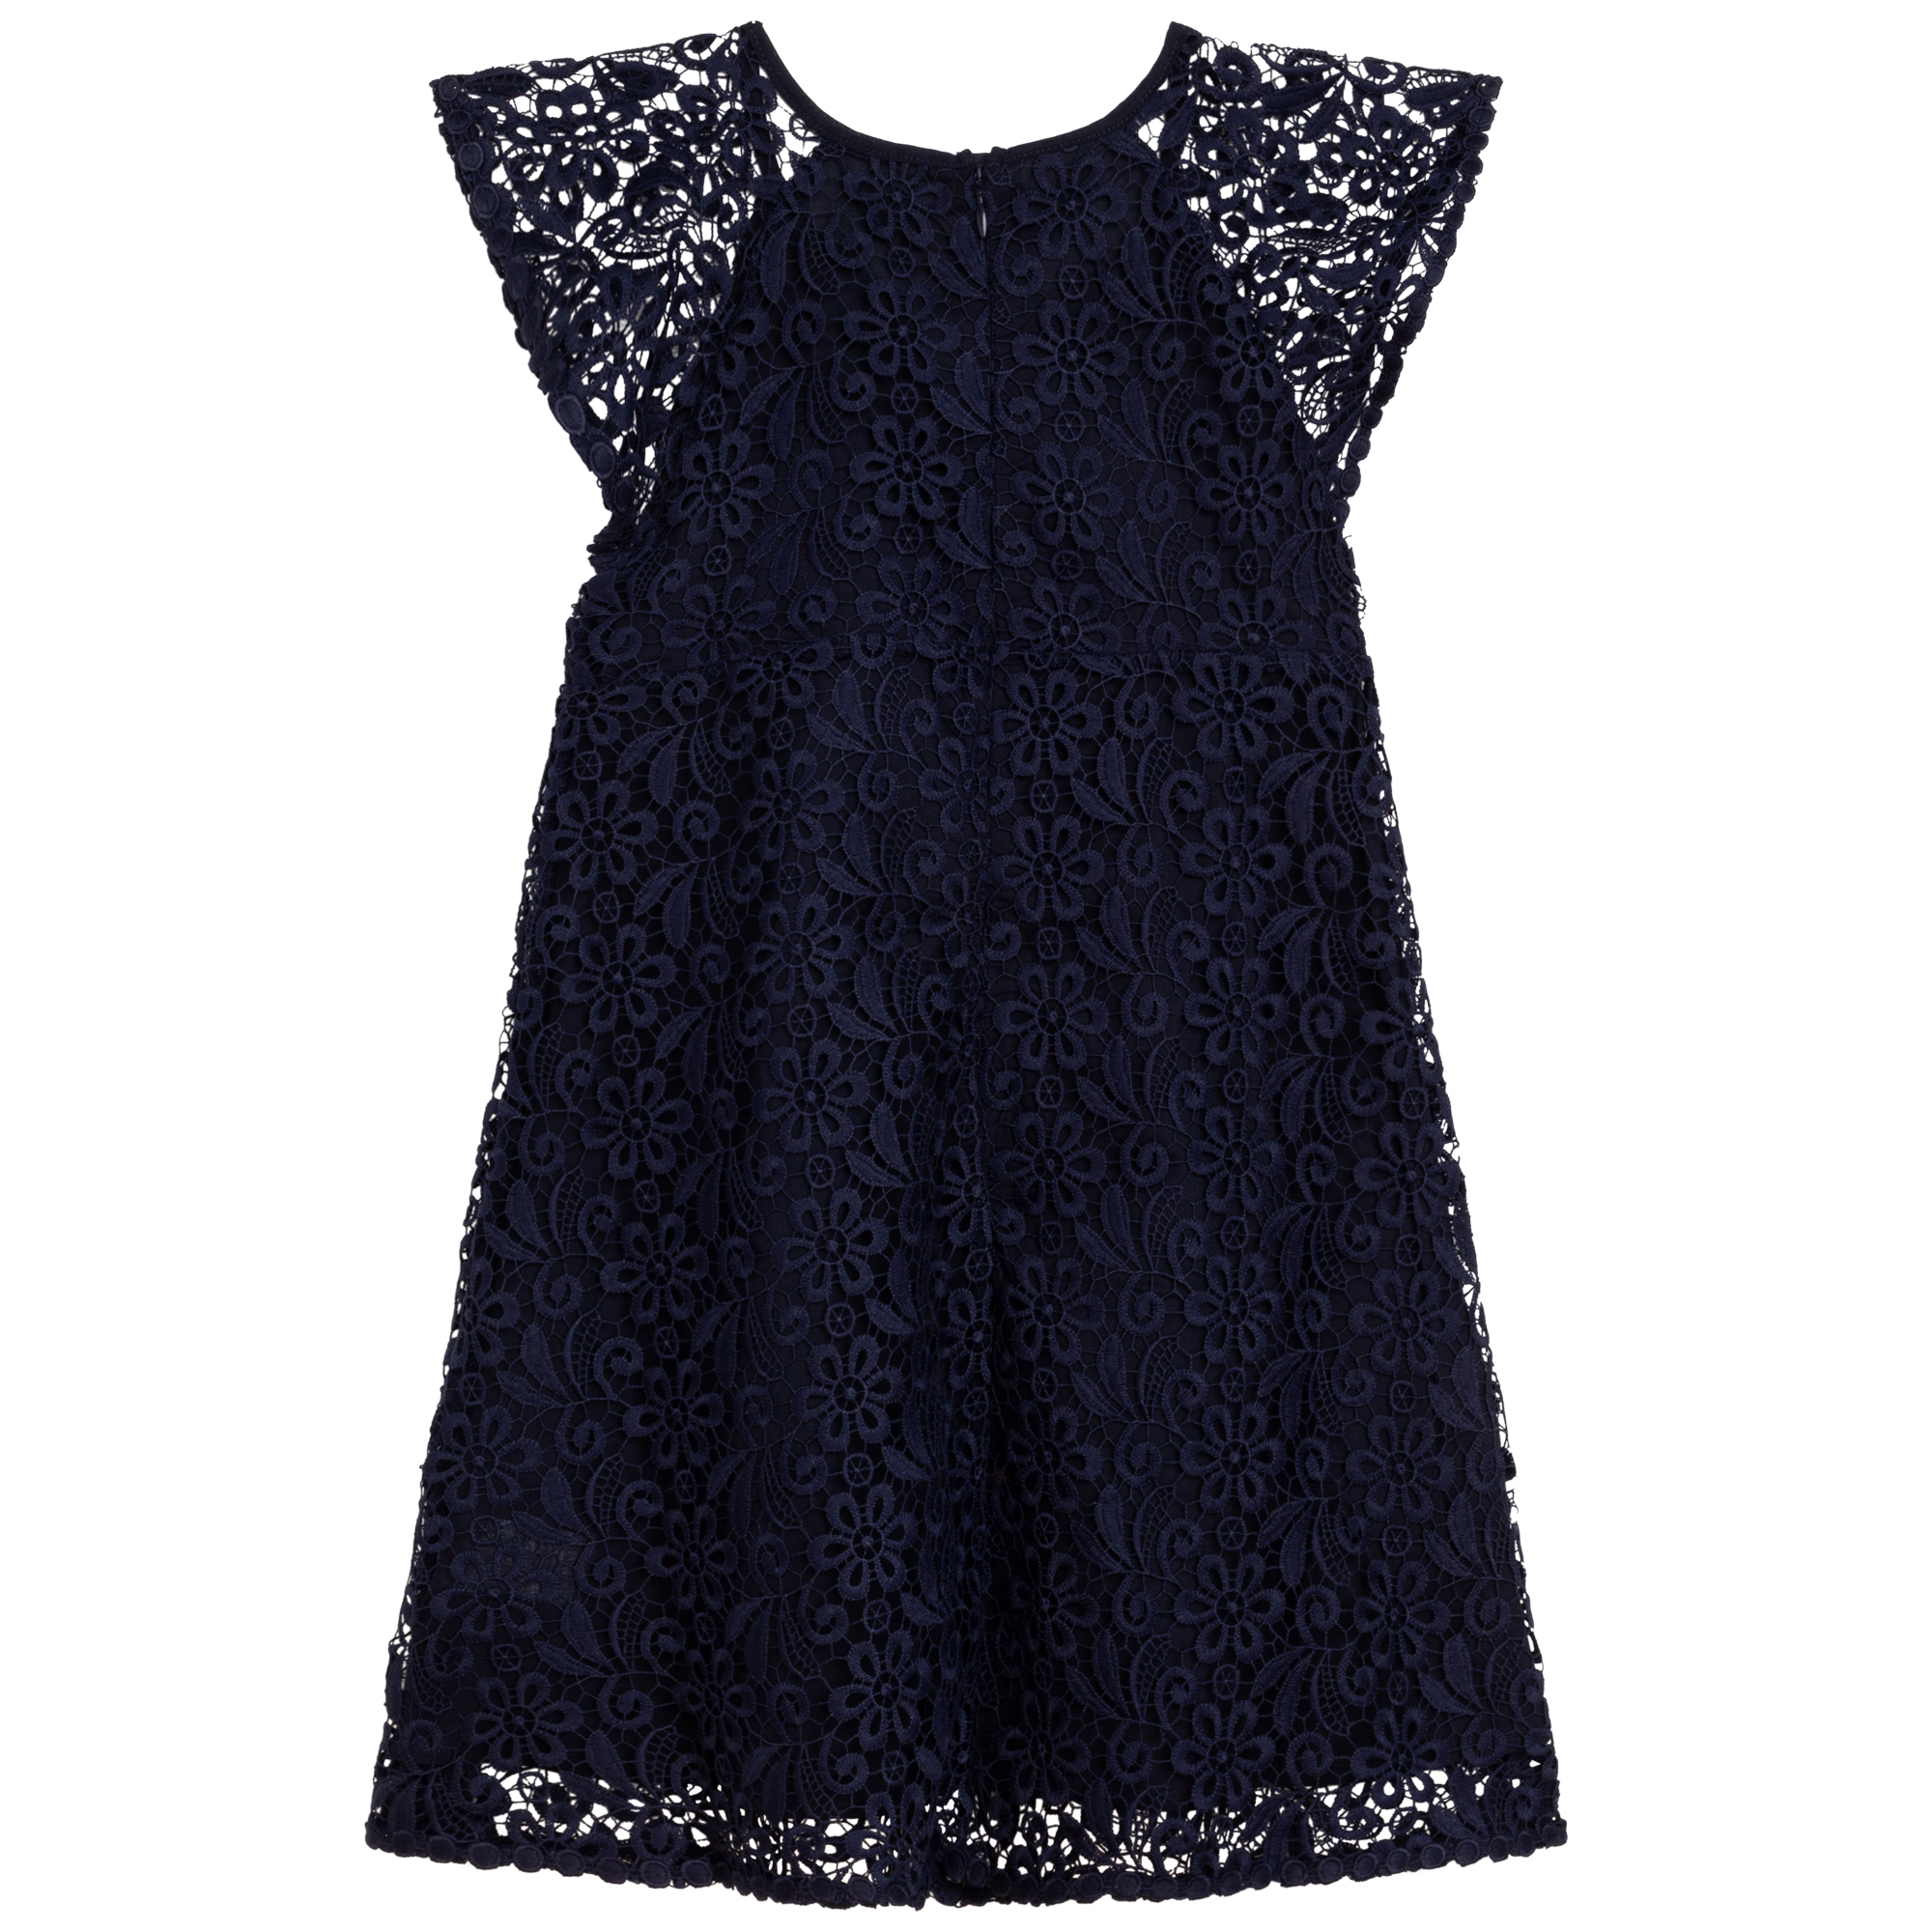 Formal lace dress MICHAEL KORS for GIRL